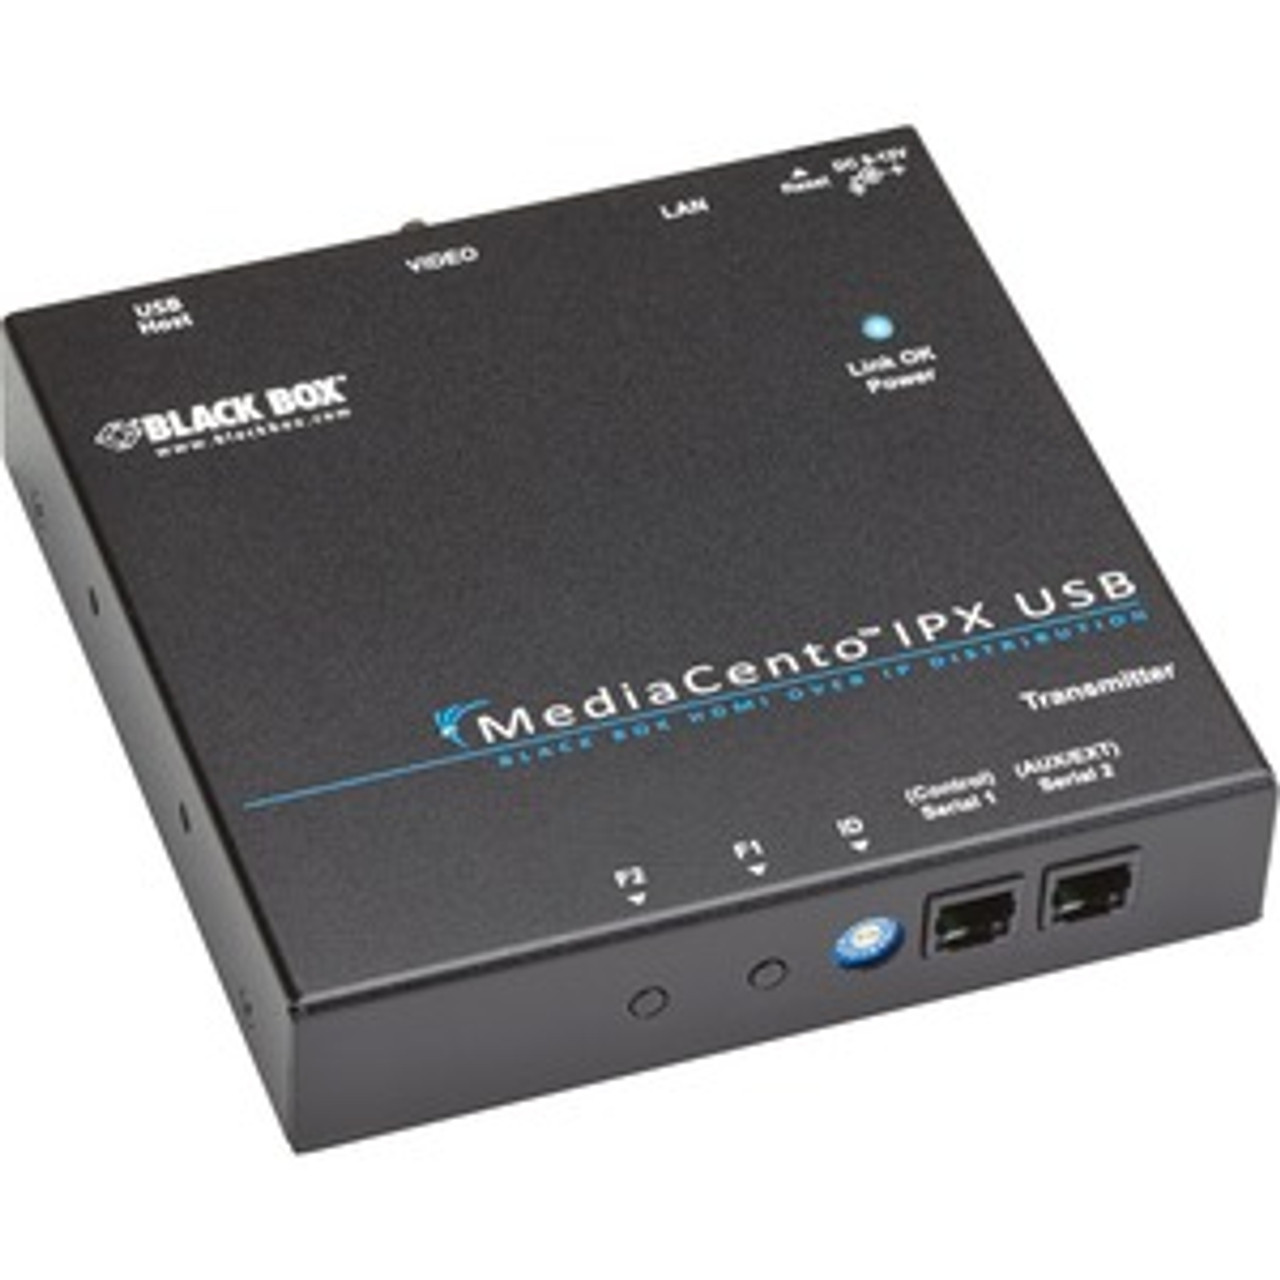 UVX-HDMI-POE-TX Black Box Mediacento Usb Transmitter Video/audio/usb Extender